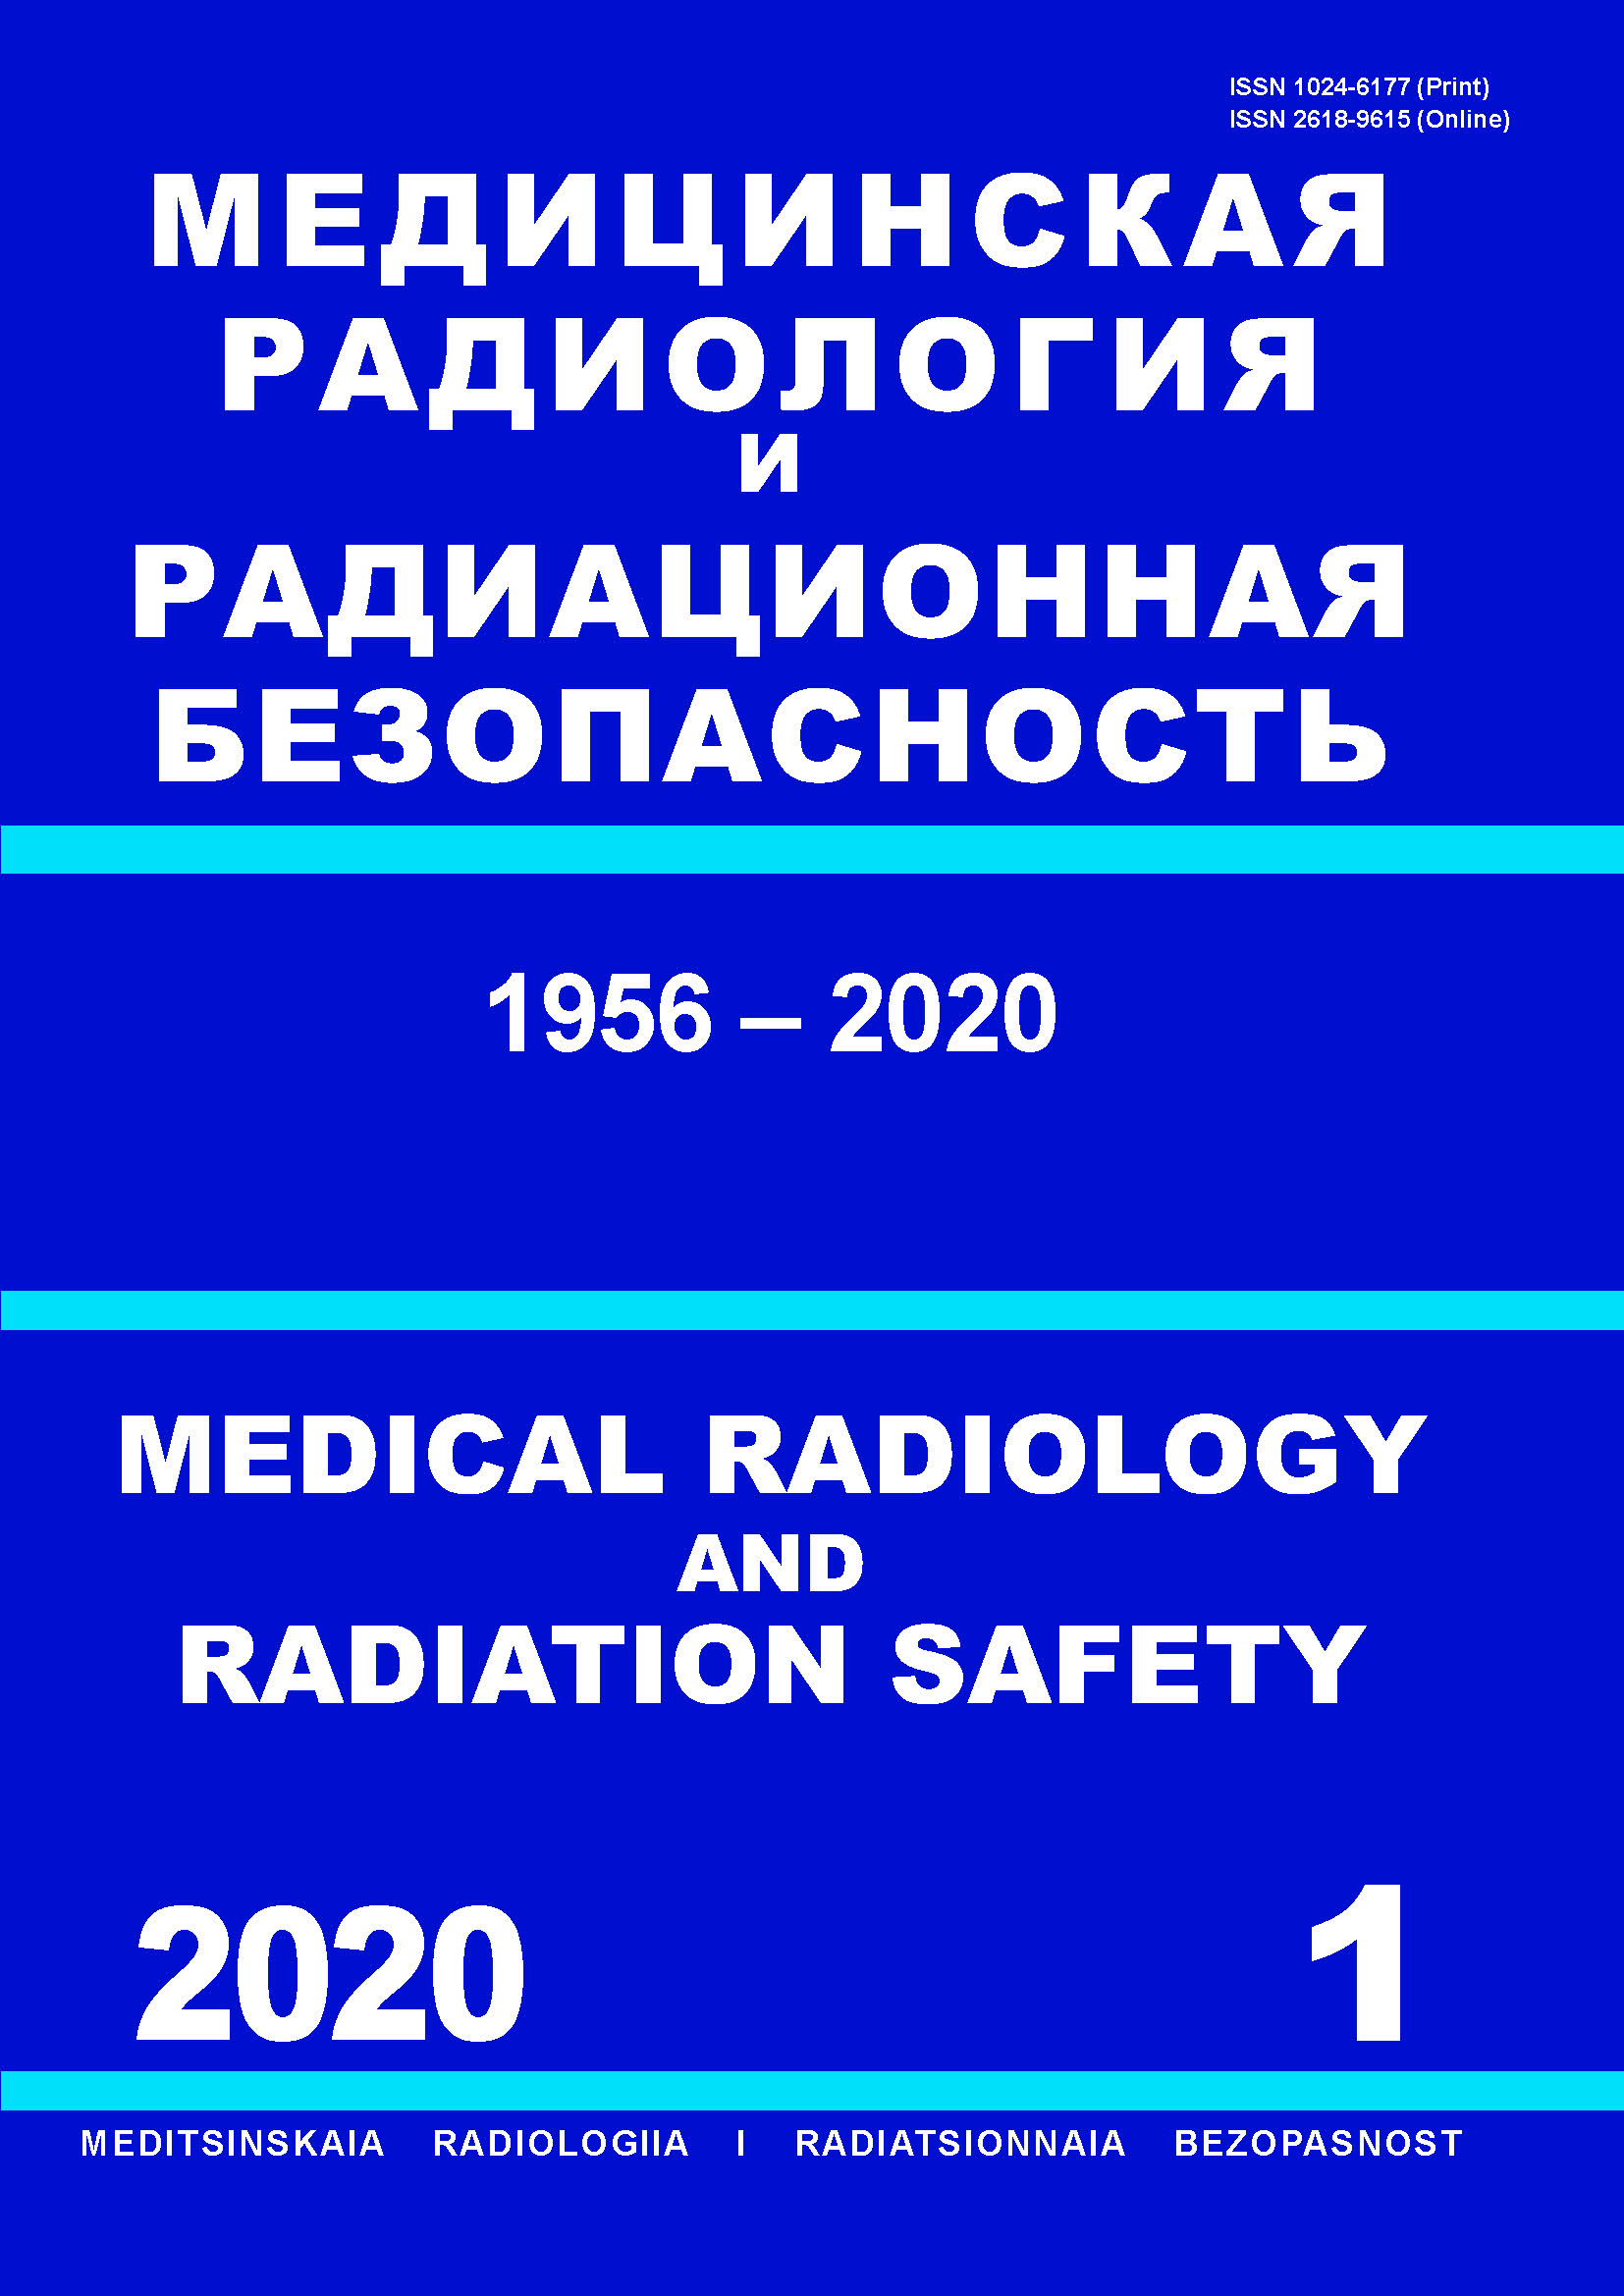                         Brain Tumors and Cell EMF Radiobiological Criteria for Assessment Hazardous Population
            